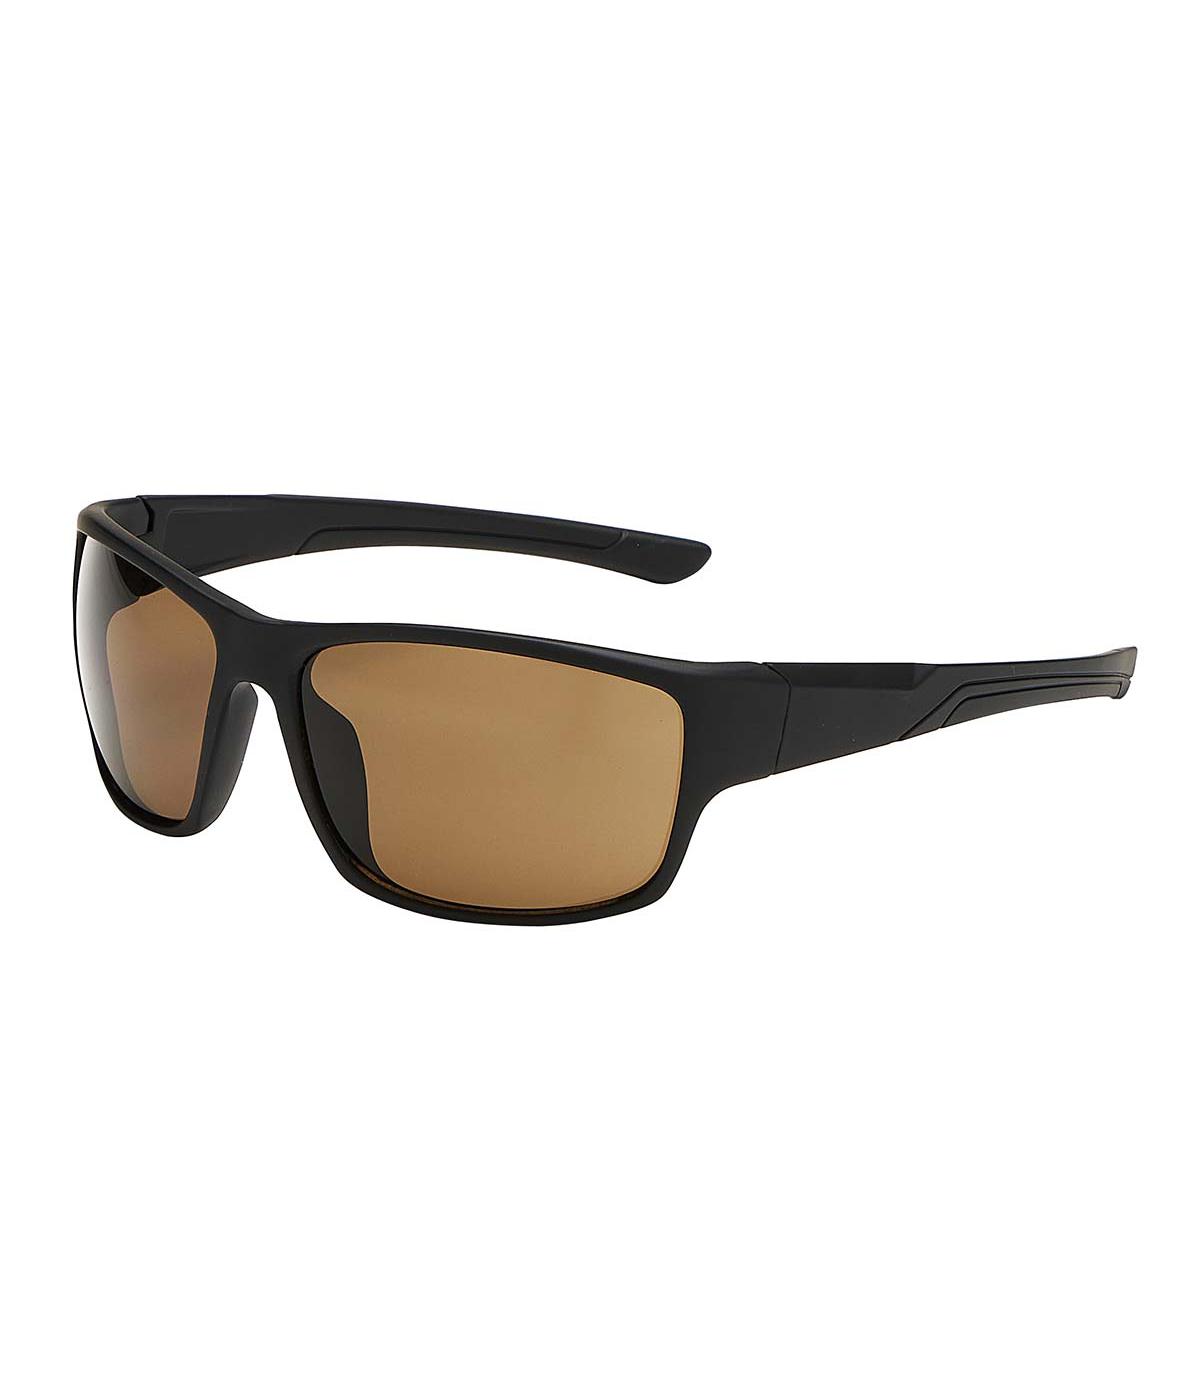 Select A Vision Men's Full Rim Square Black Brown Sunglasses ; image 2 of 2